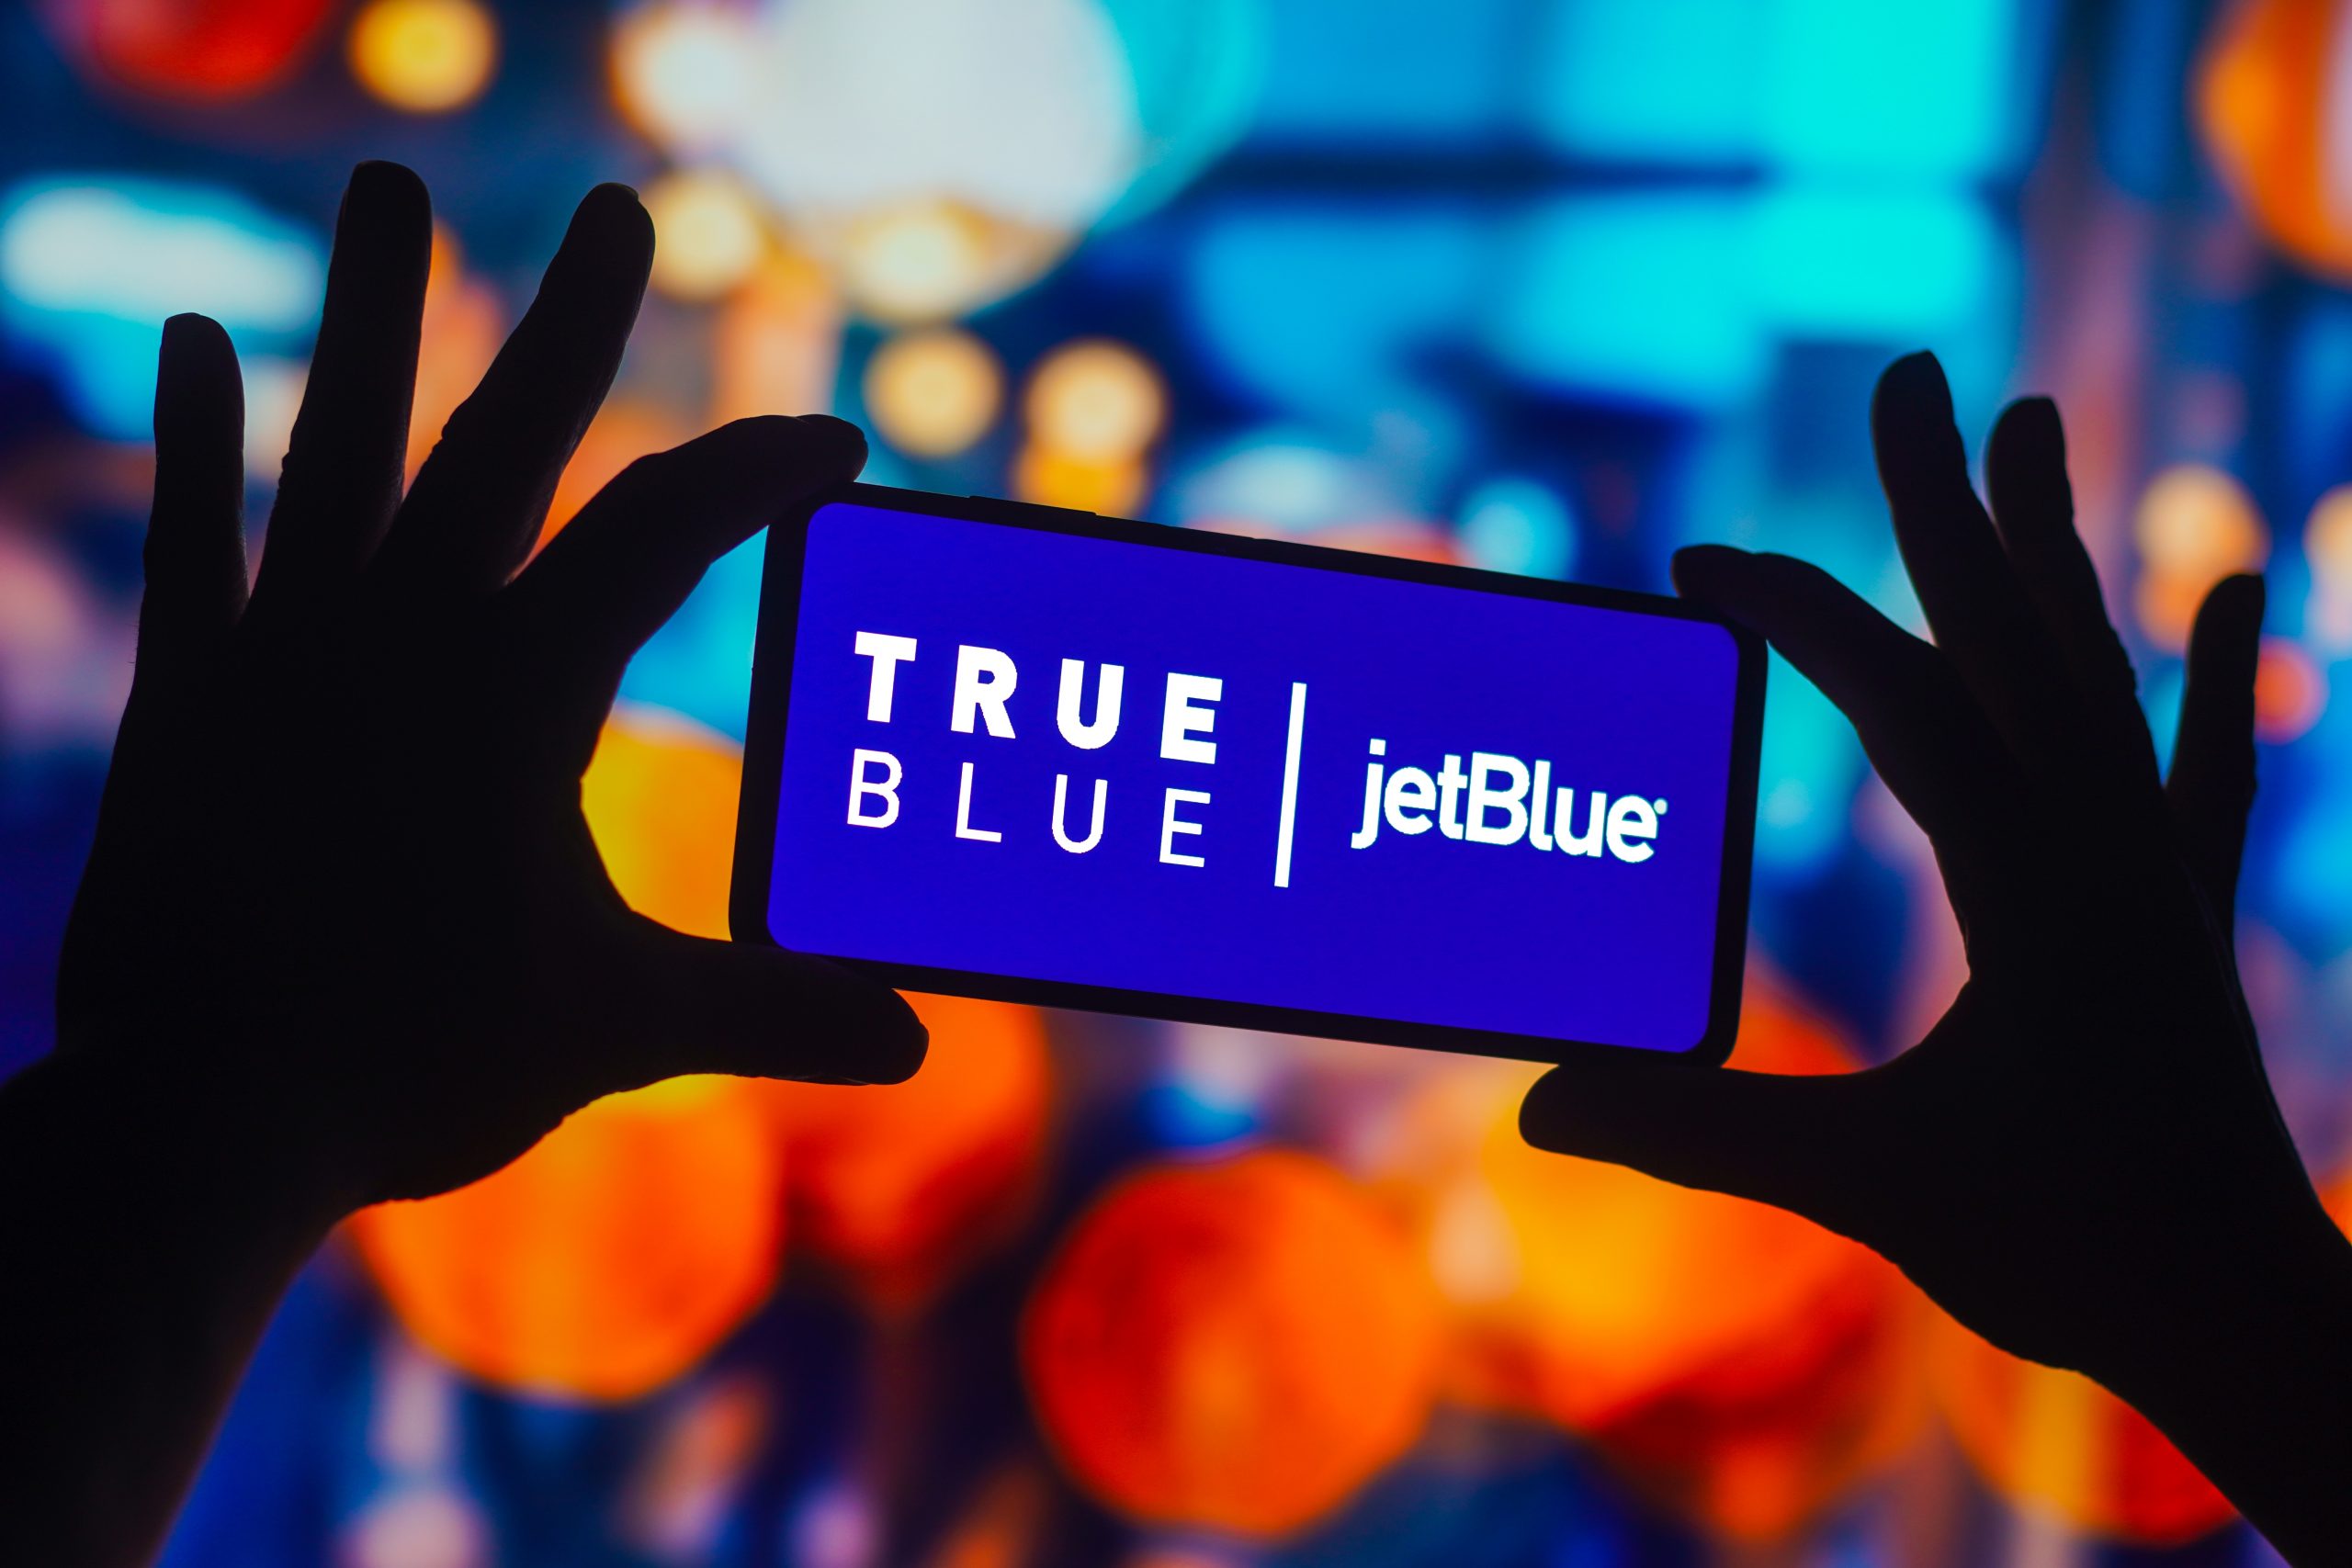 JetBlue TrueBlue program